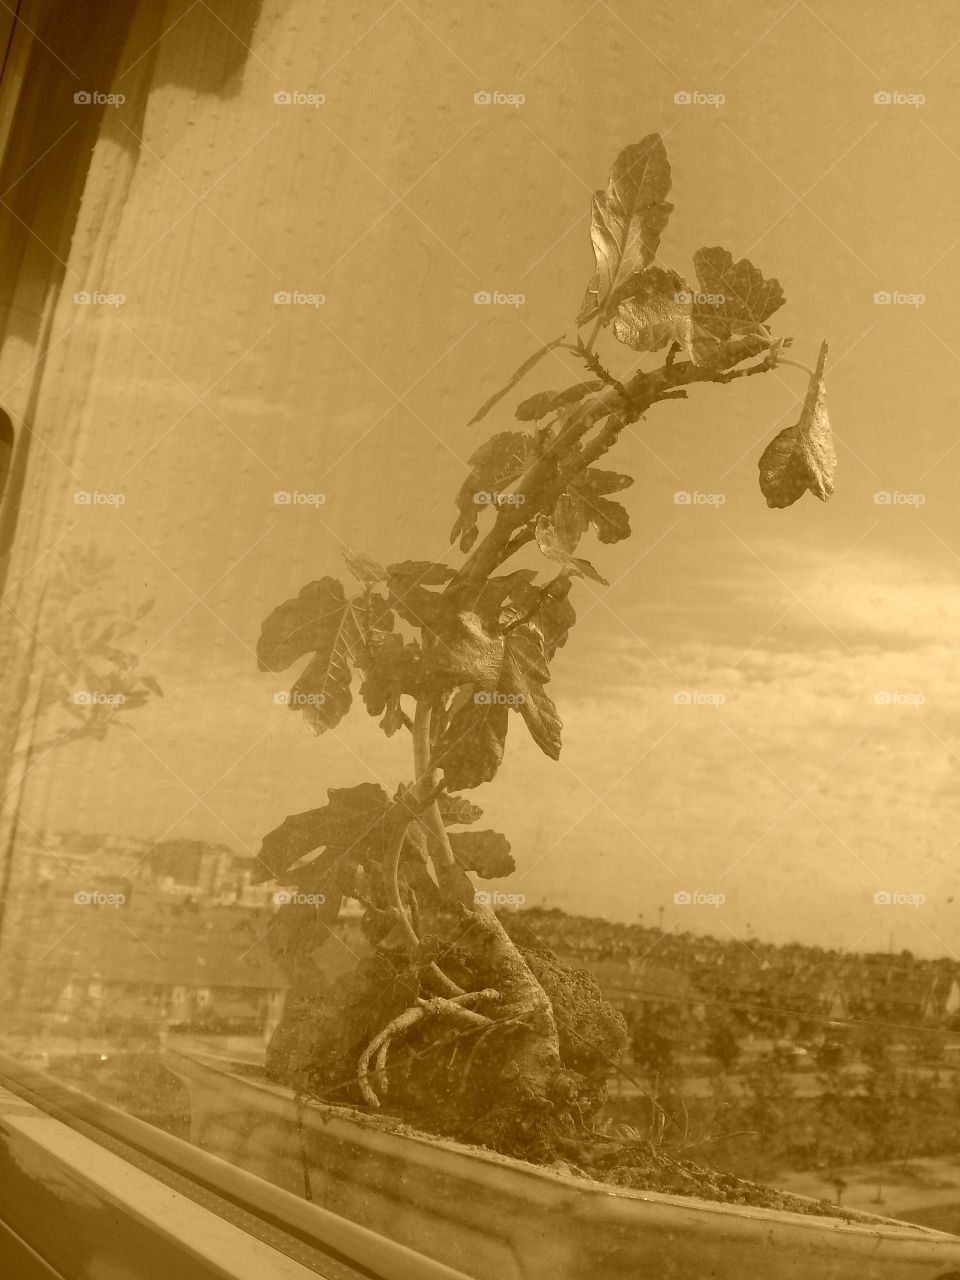 bonsais in a window. bonsais in a window looking at the street